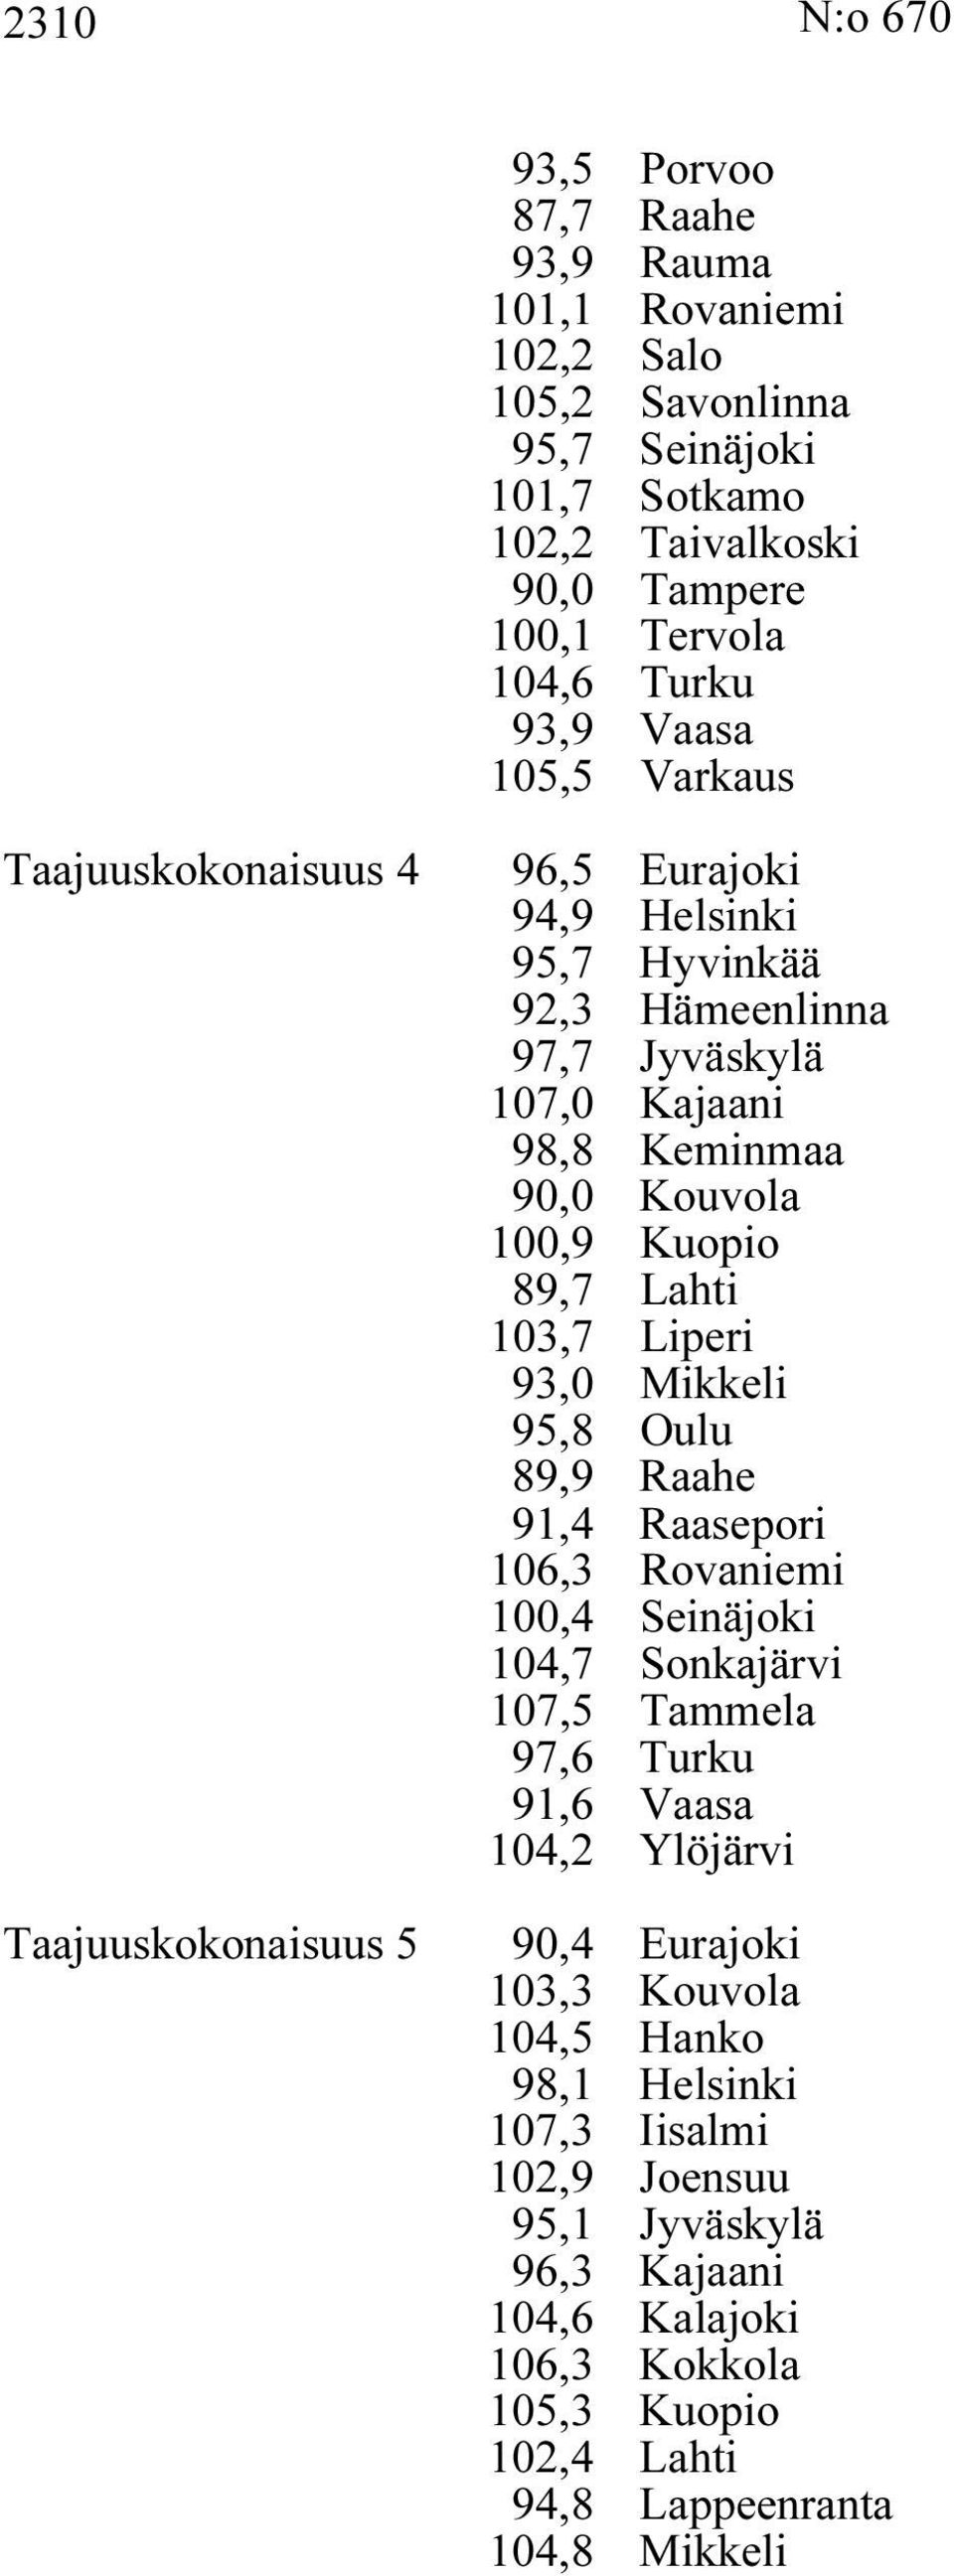 Kuopio 89,7 Lahti 103,7 Liperi 93,0 Mikkeli 95,8 Oulu 89,9 Raahe 91,4 Raasepori 106,3 Rovaniemi 100,4 Seinäjoki 104,7 Sonkajärvi 107,5 Tammela 97,6 Turku 91,6 Vaasa 104,2 Ylöjärvi 90,4